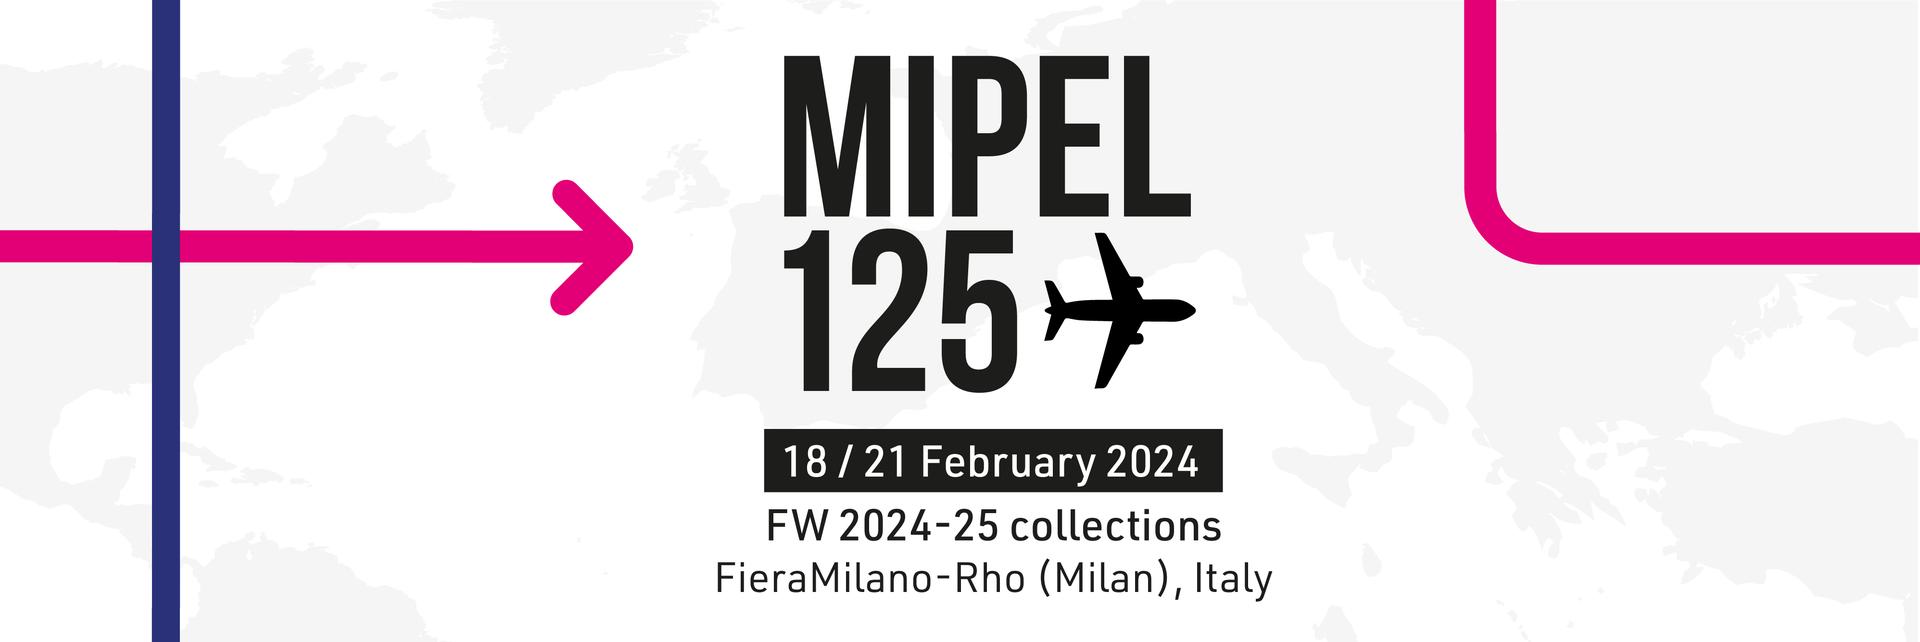 MIPEL125 | FEBRUARY 18/21, 2024 | FW 2024/25 COLLECTIONS | FIERAMILANO-RHO, MILAN, ITALY.